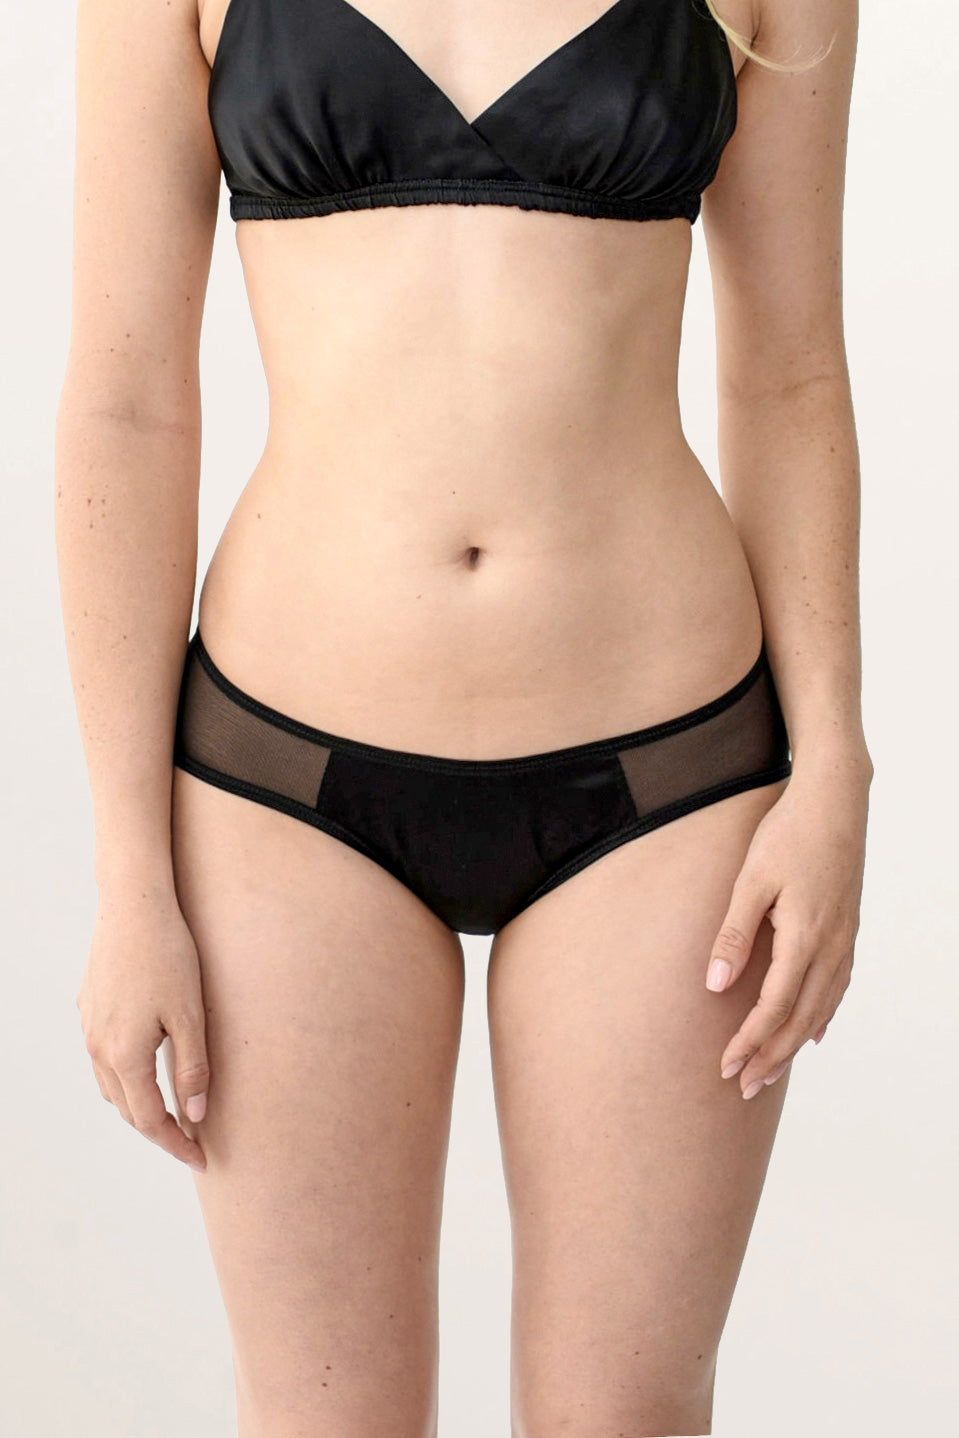 Buy Xs and Os Women Sheer Mesh Bra Panty Lingerie Set (Black, Free